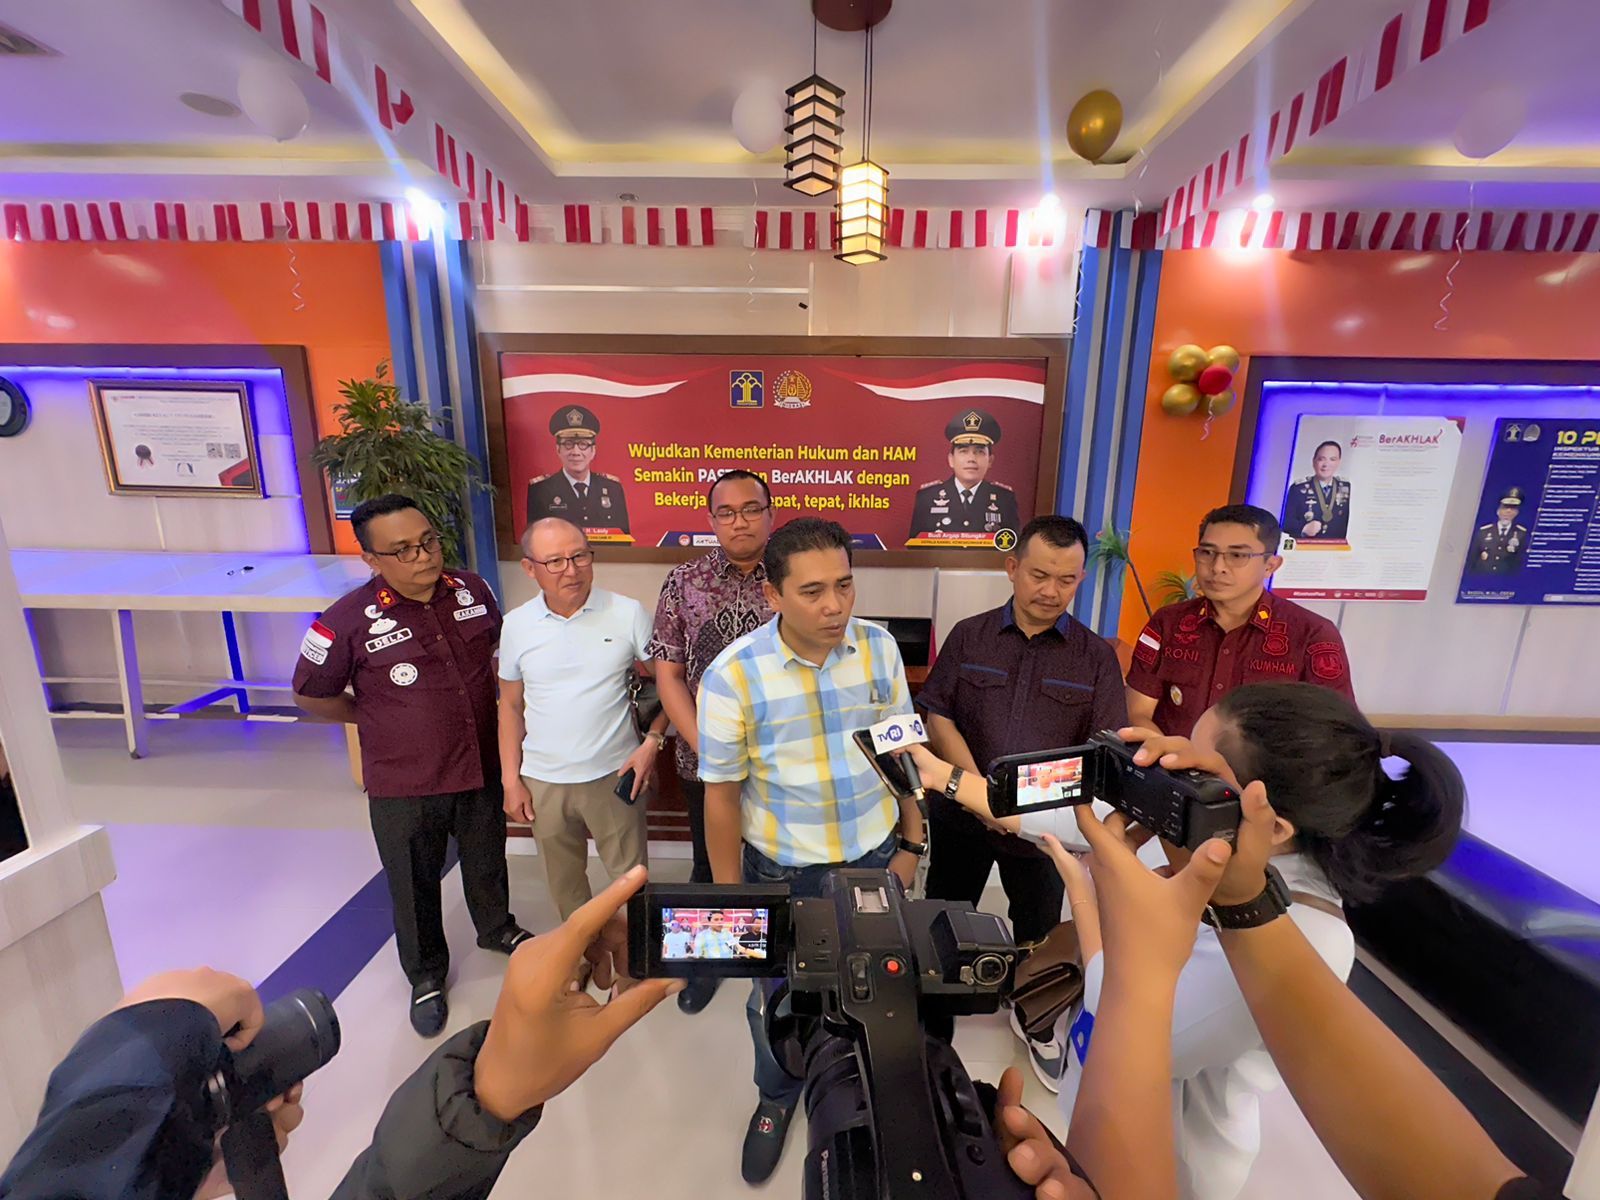 Hari terakhir layanan Paspor SIMPATIK dalam rangka meriahkan Hari Bhakti Imigrasi, Kakanwil Kemenkumham Riau sambangi Kantor Imigrasi Pekanbaru